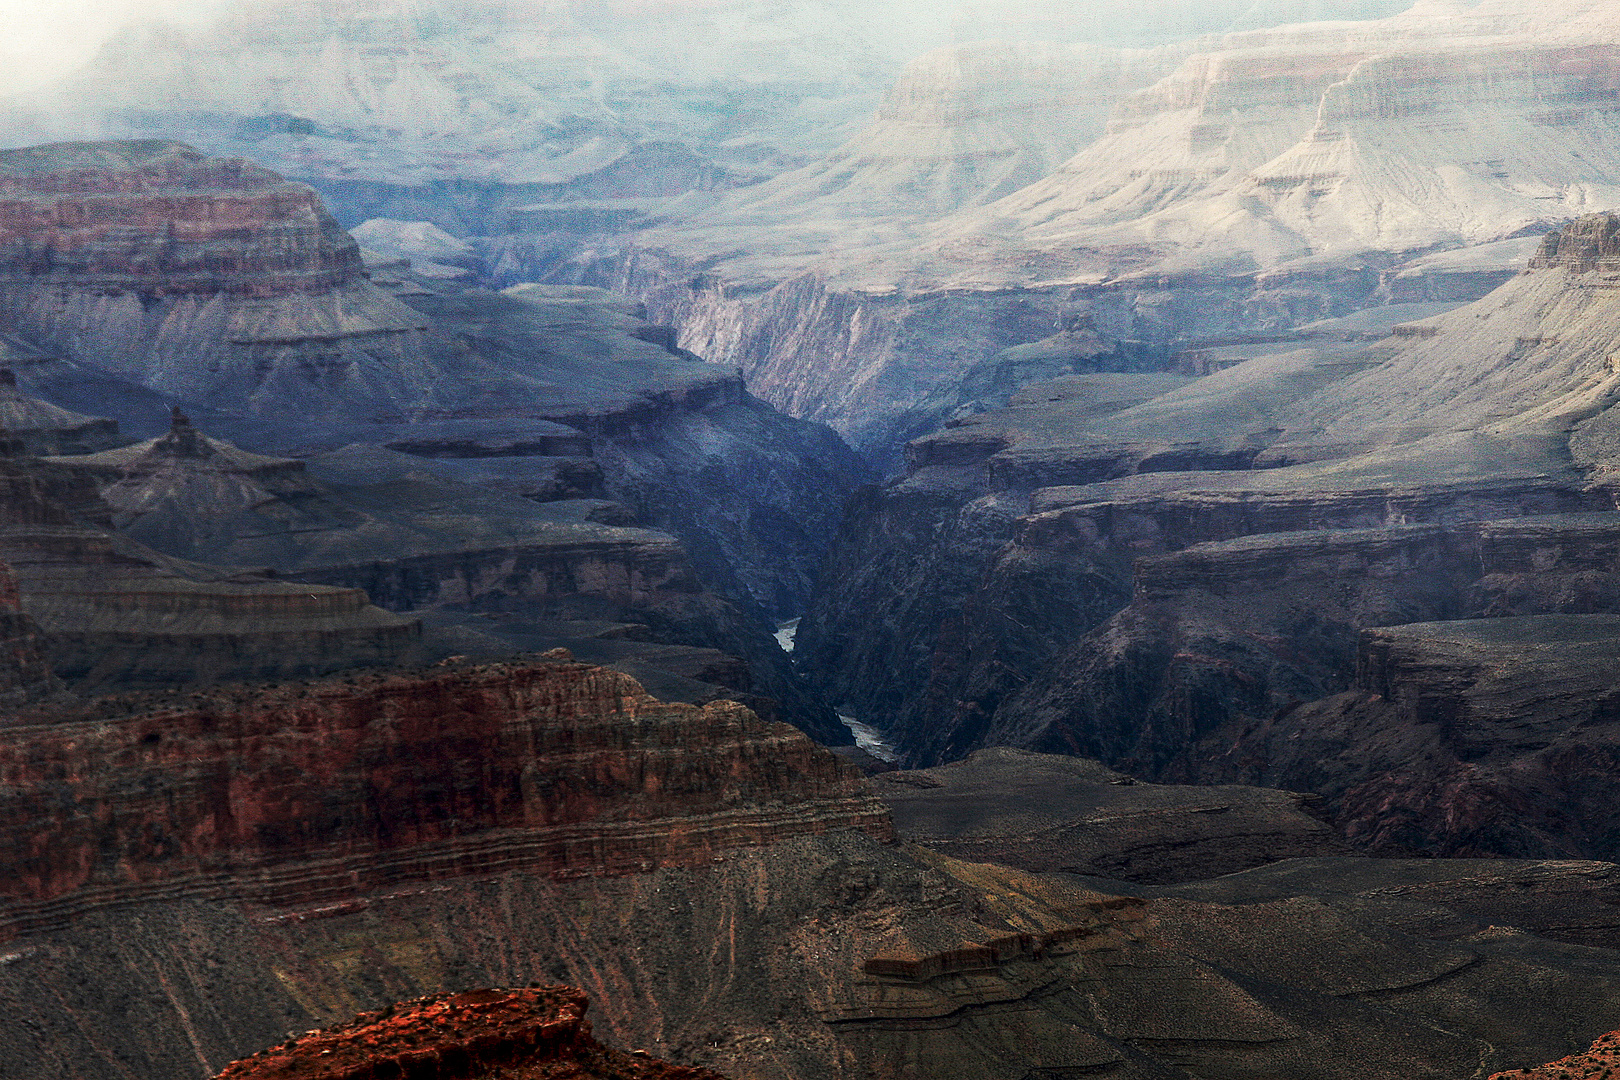 Grand Canyon im März 